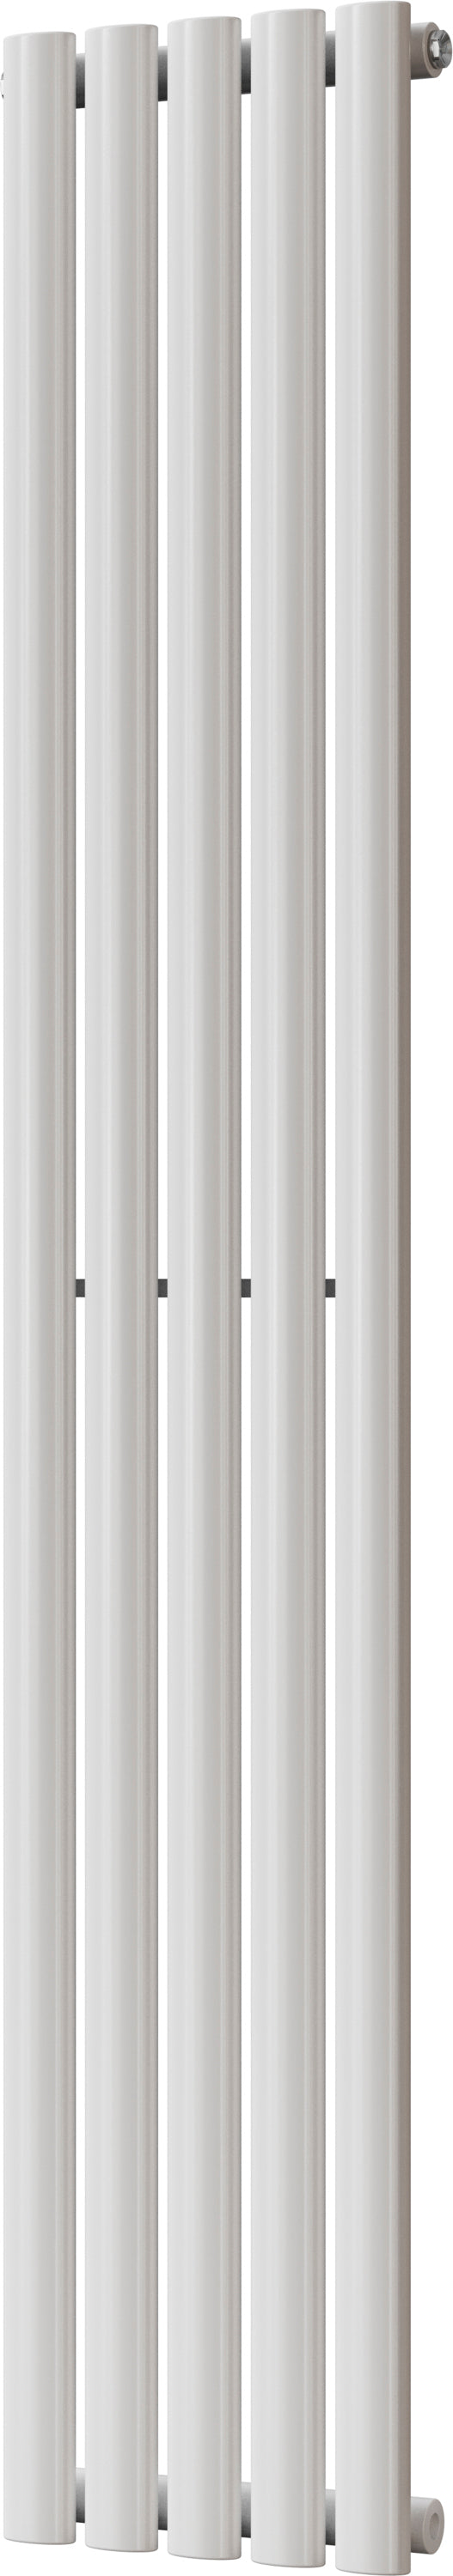 Omeara - White Vertical Radiator H1600mm x W290mm Single Panel